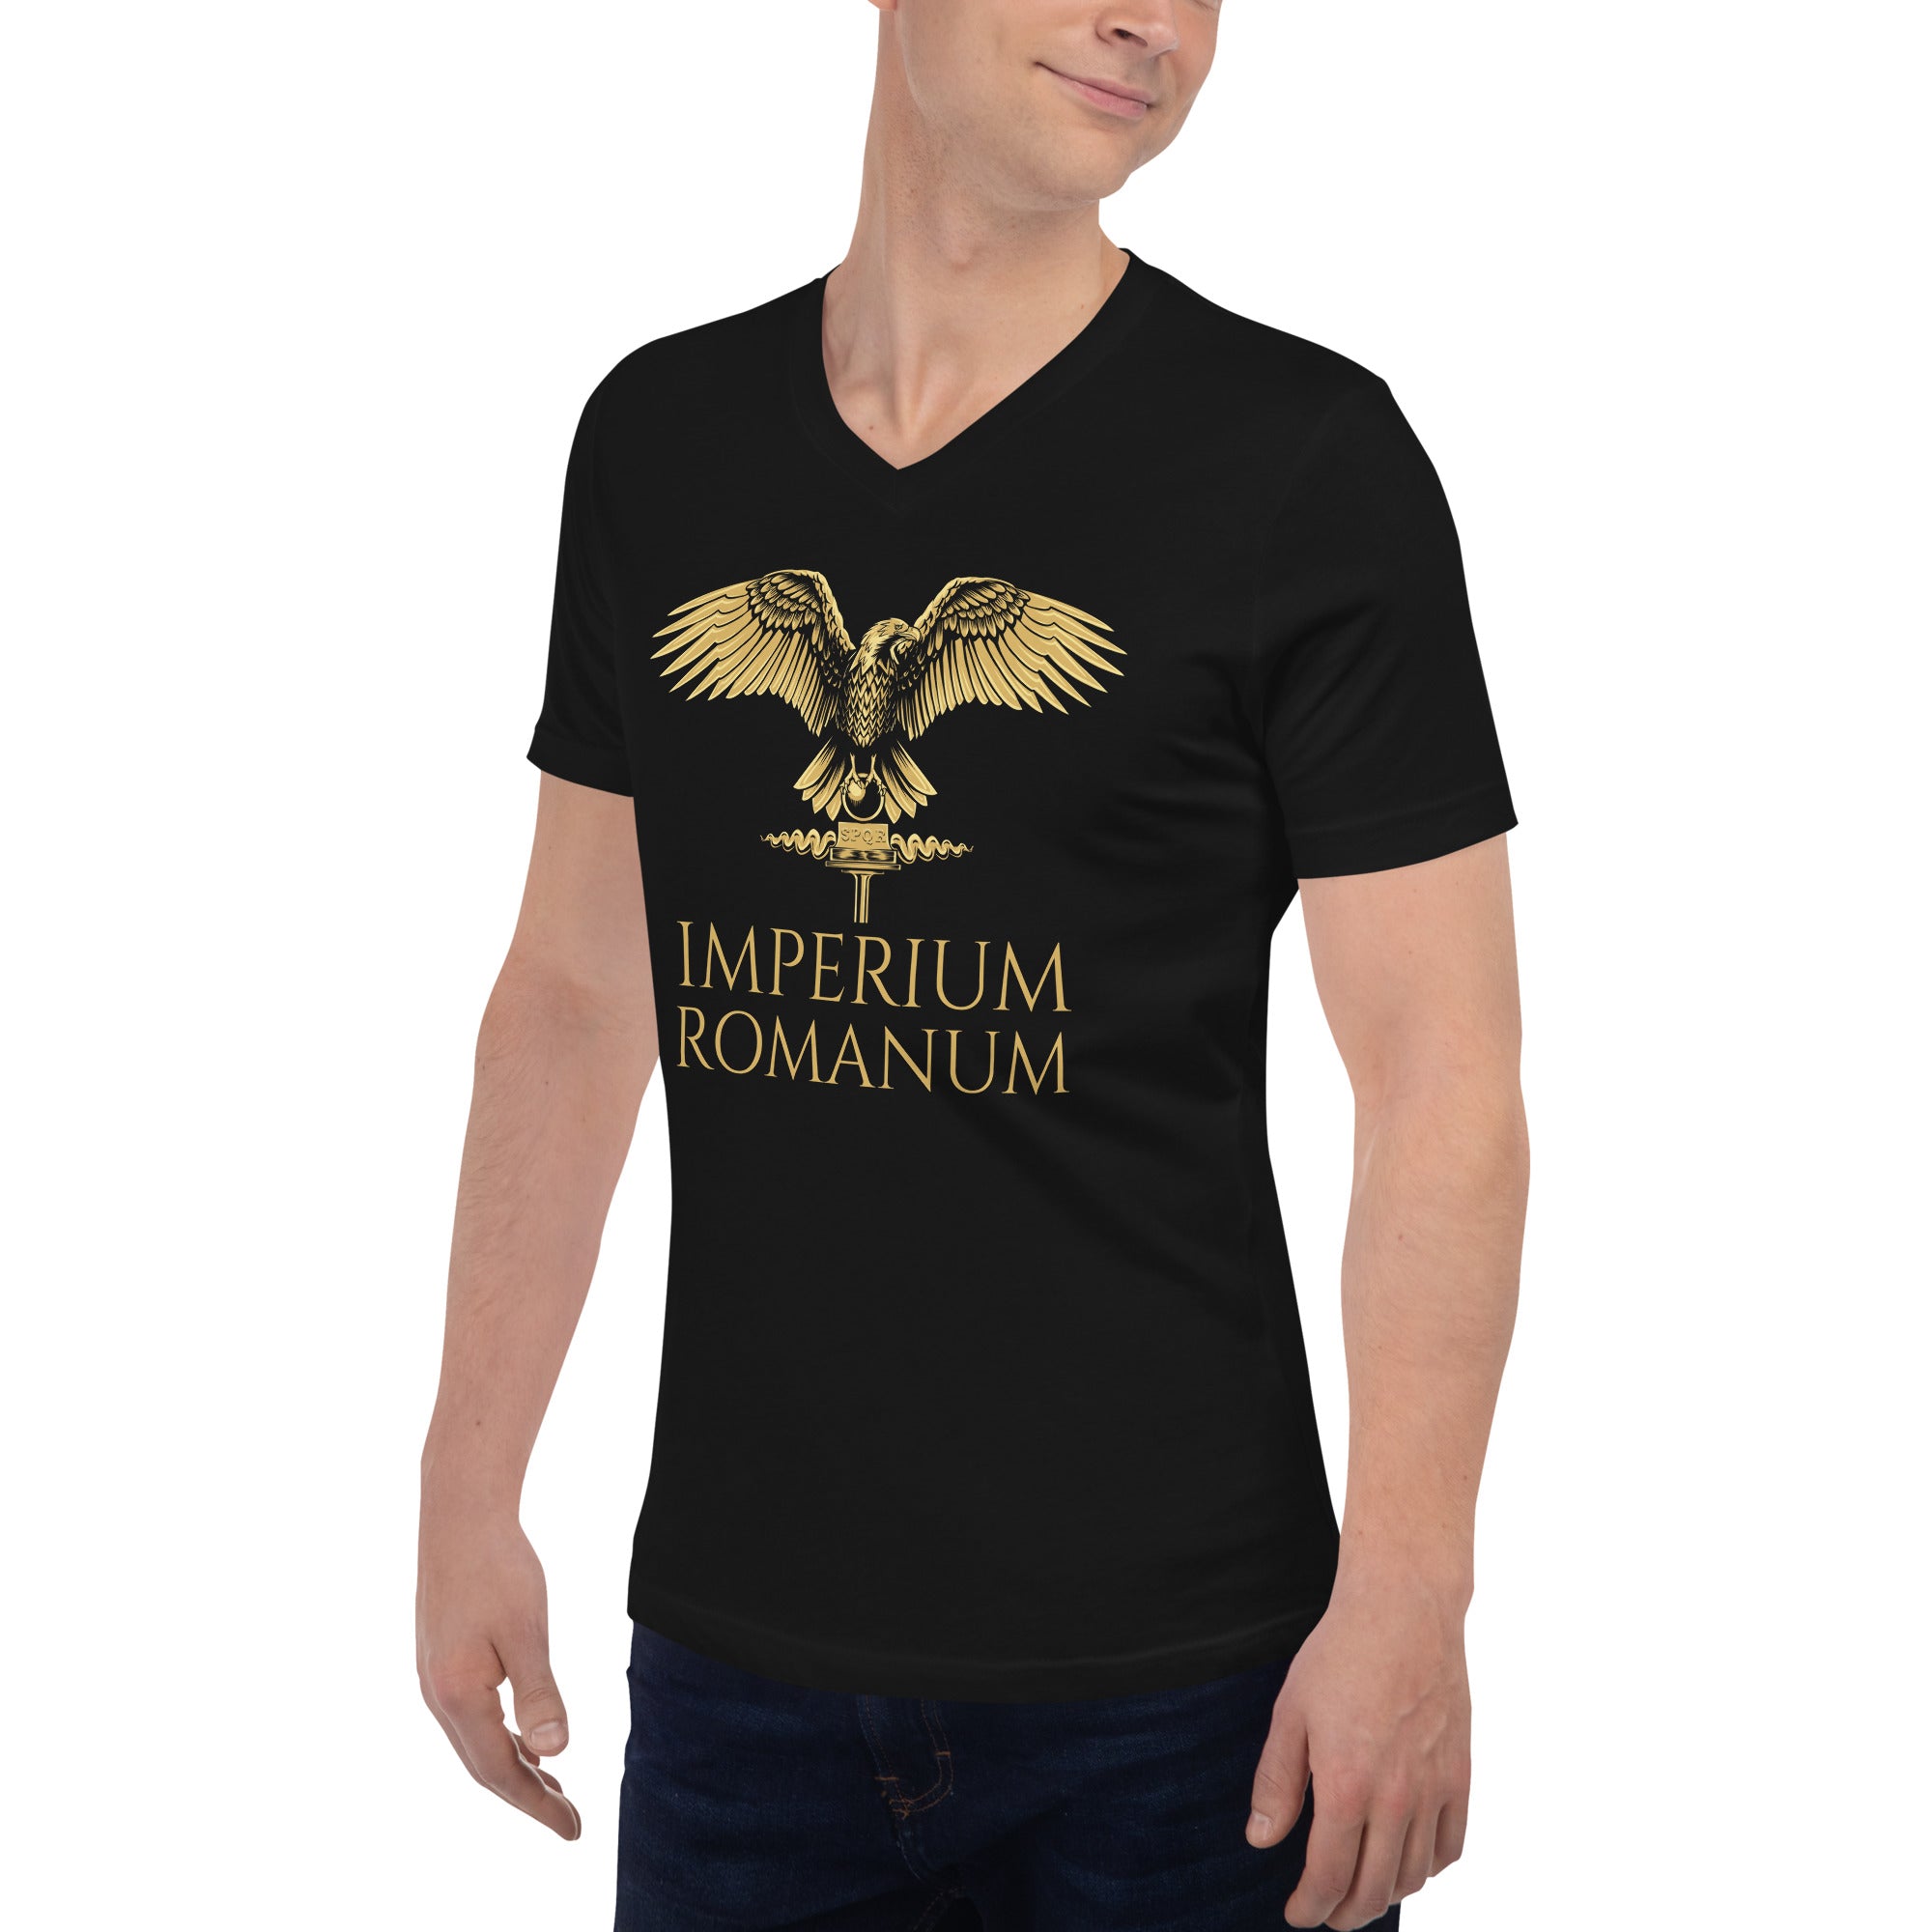 Imperium Romanum - Roman Empire - Ancient Rome - Unisex Short Sleeve V-Neck T-Shirt